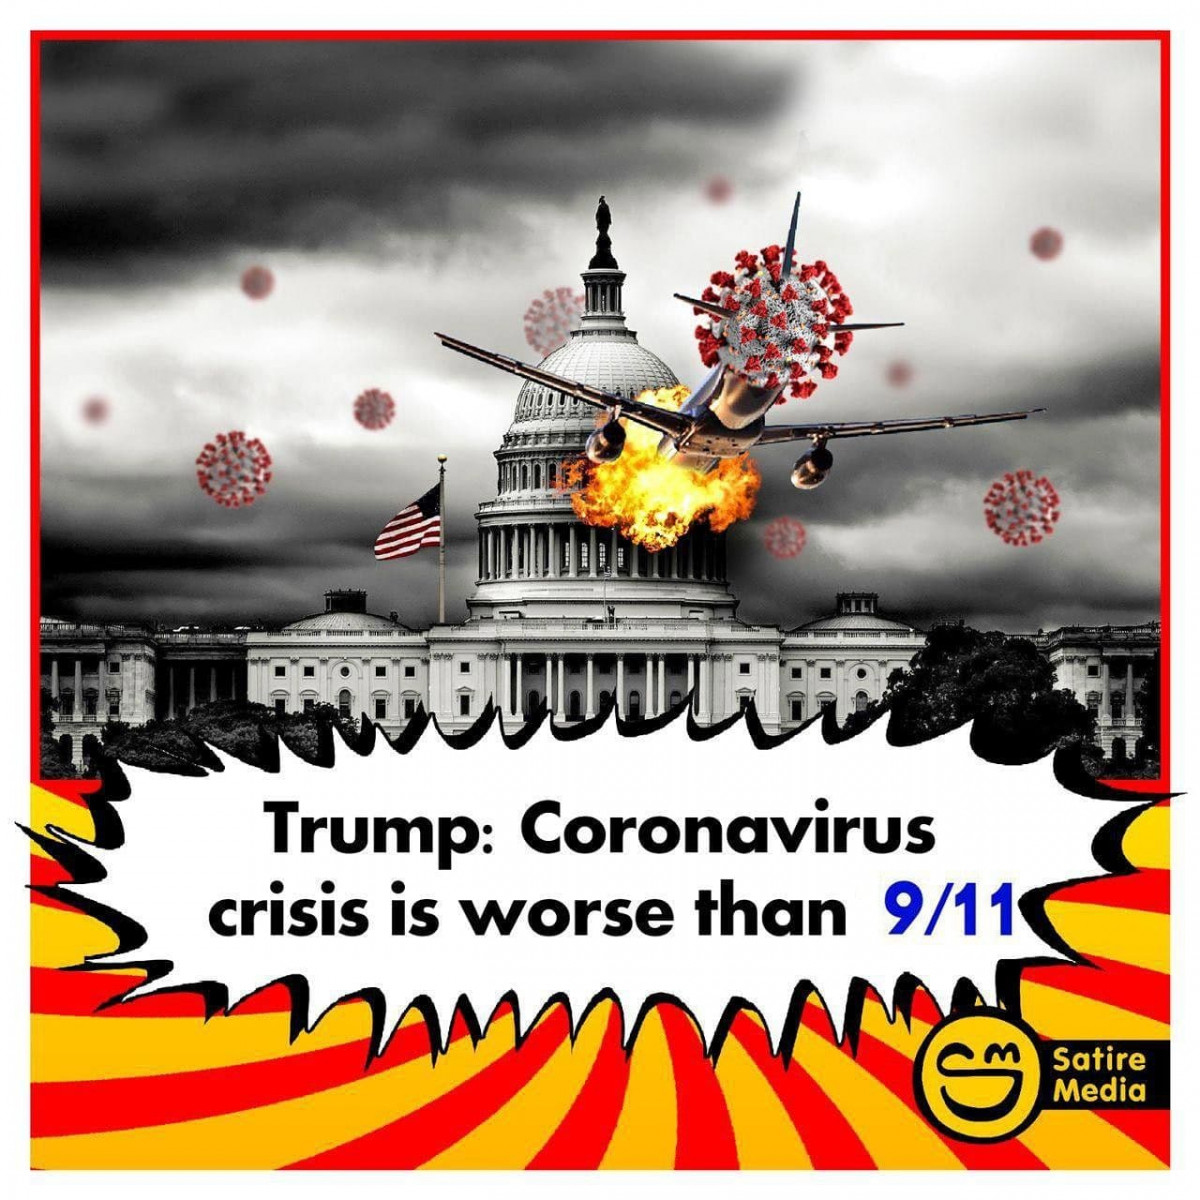 Trump: Coronavirus crisis is worse than 9/11